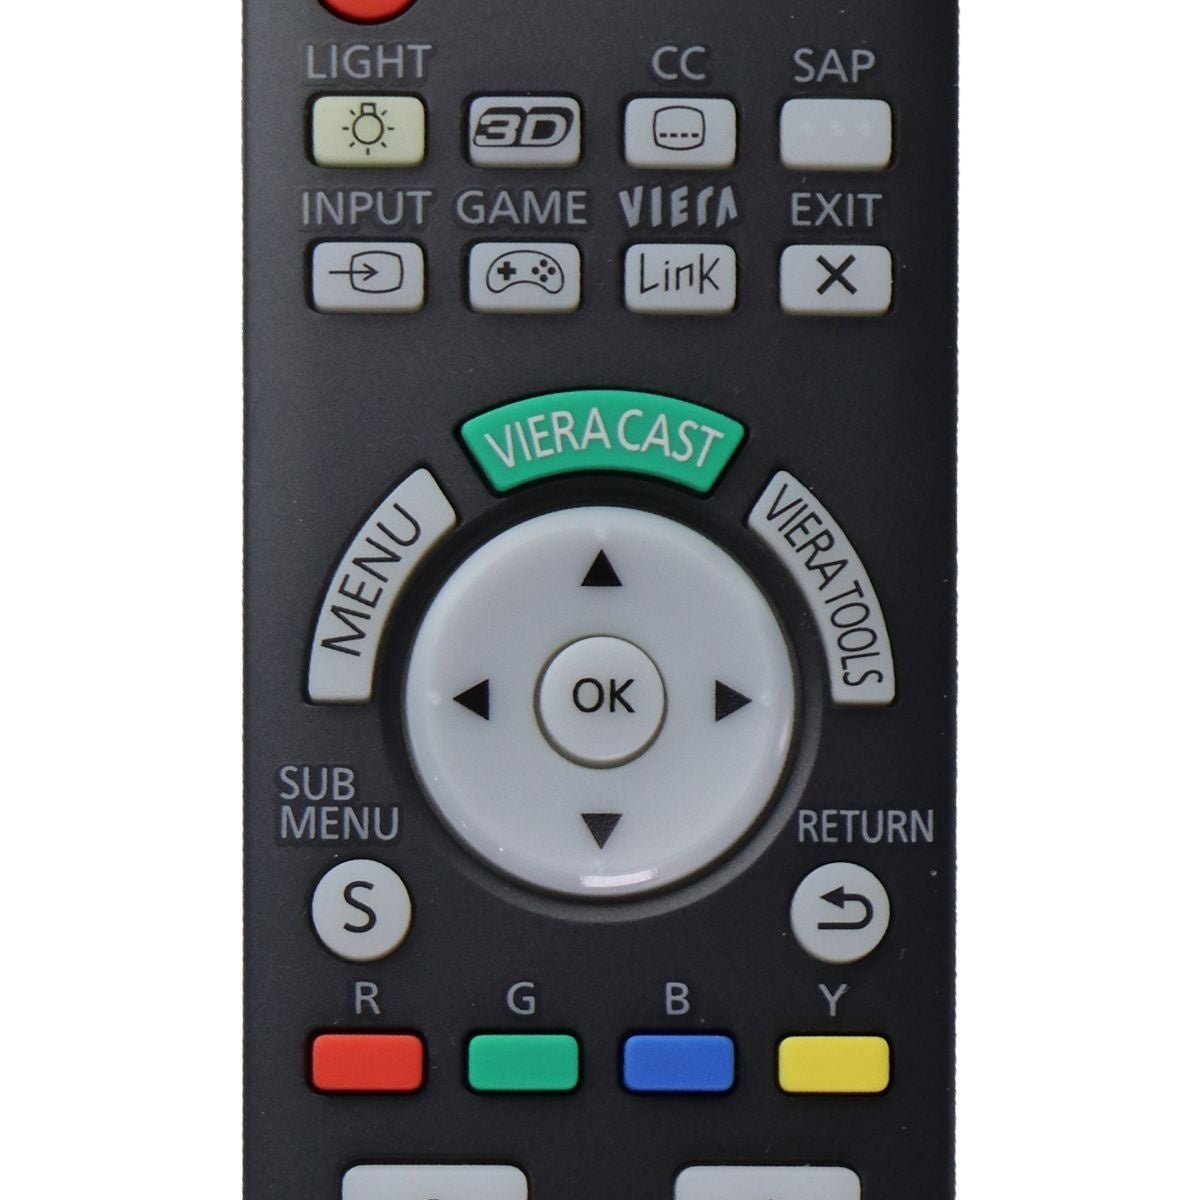 Panasonic TV Remote Control - Black (N2QAYB000571) TV, Video & Audio Accessories - Remote Controls Panasonic    - Simple Cell Bulk Wholesale Pricing - USA Seller